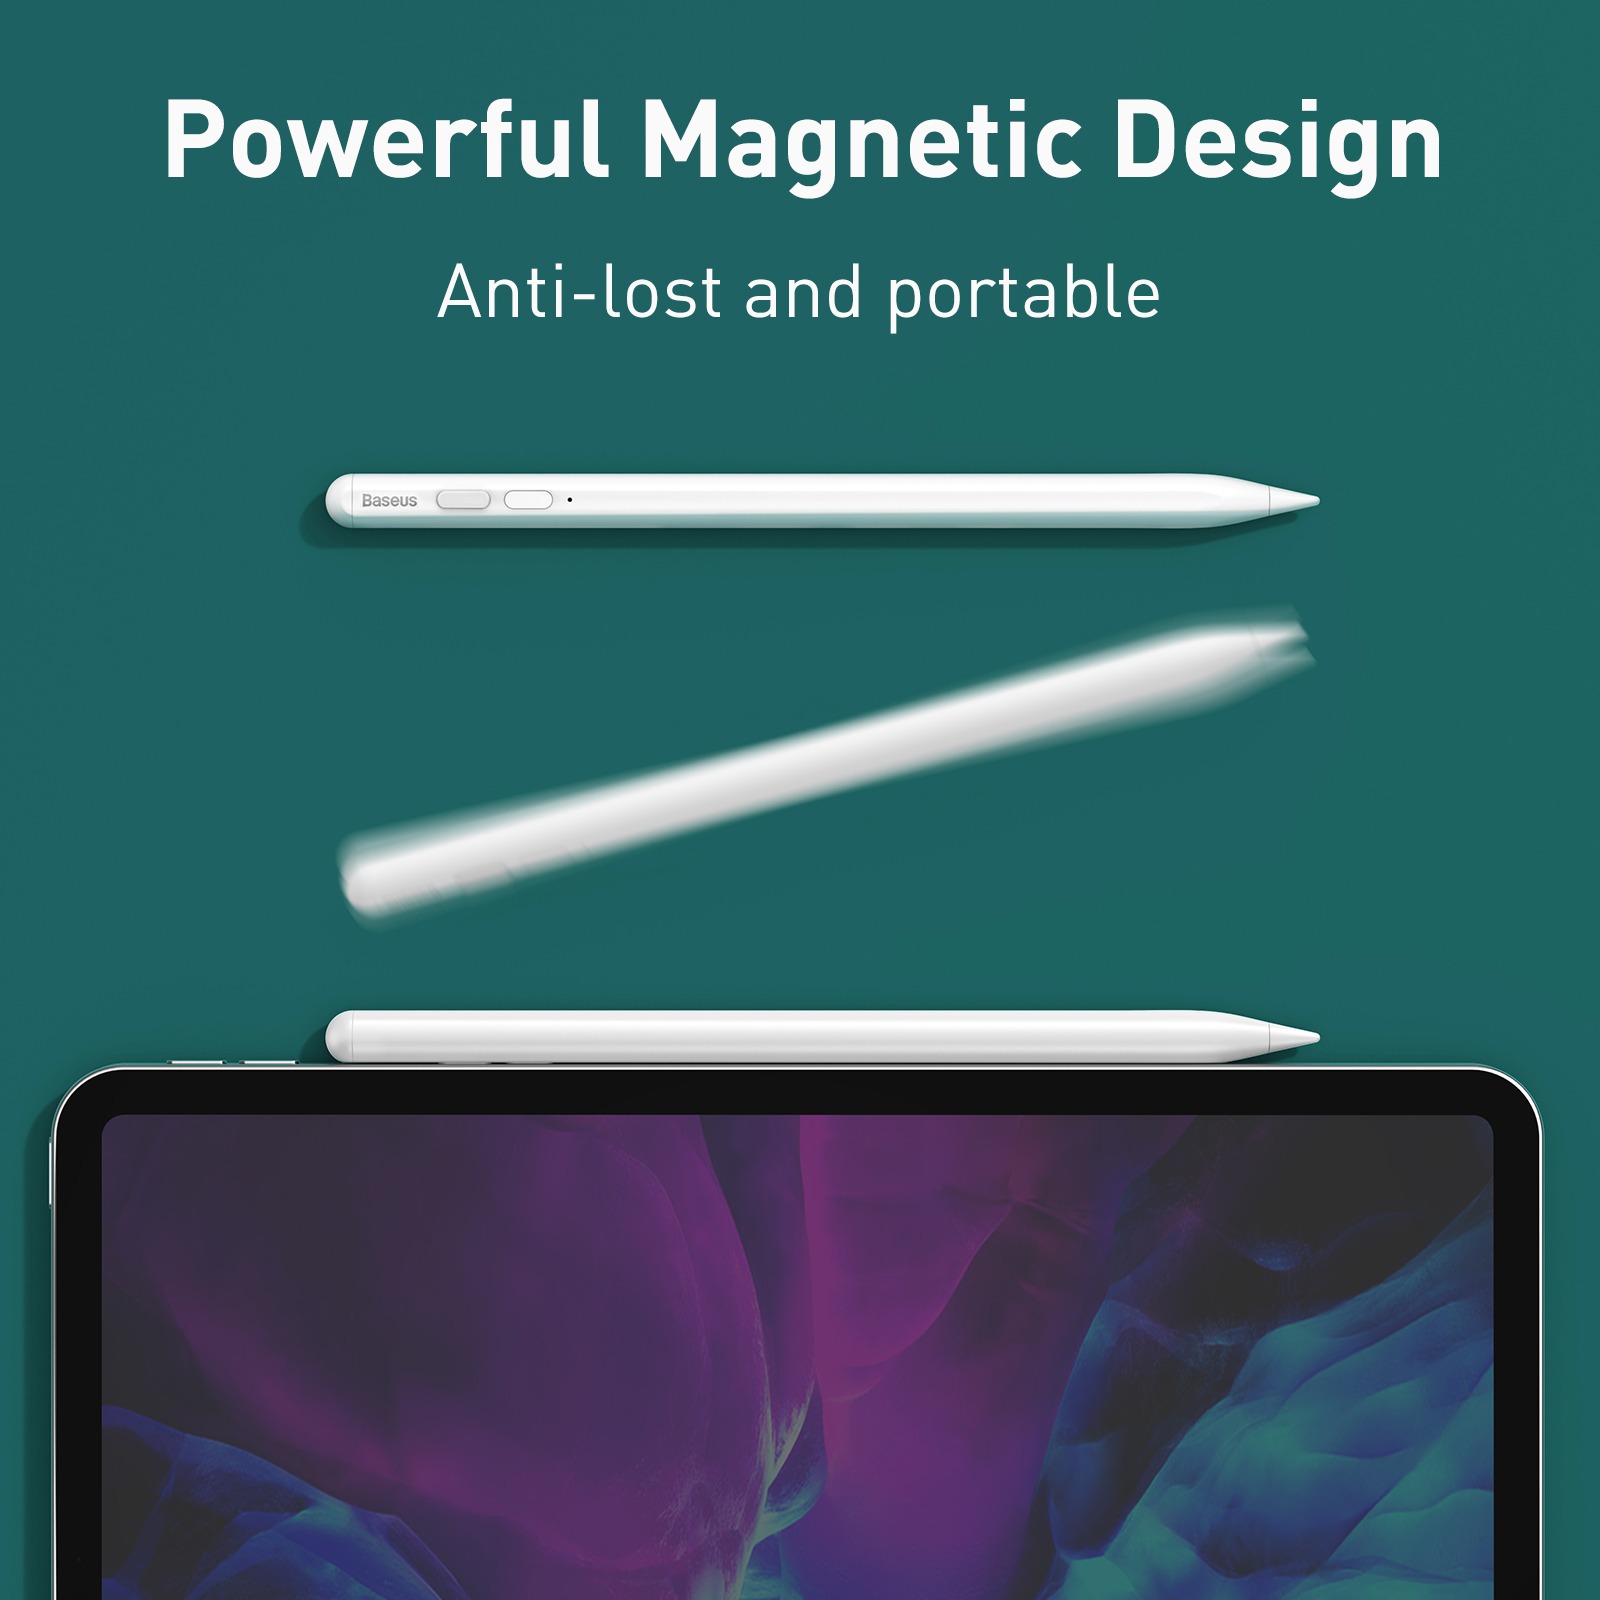 Bút cảm ứng Baseus Smooth Writing Capacitive Stylus dùng cho iPad Pro/ Smartphone/ Tablet Android (Active + Passive Version, Magnetic Adsorption, Tilt &amp; Strength sensitive) - Hàng chính hãng